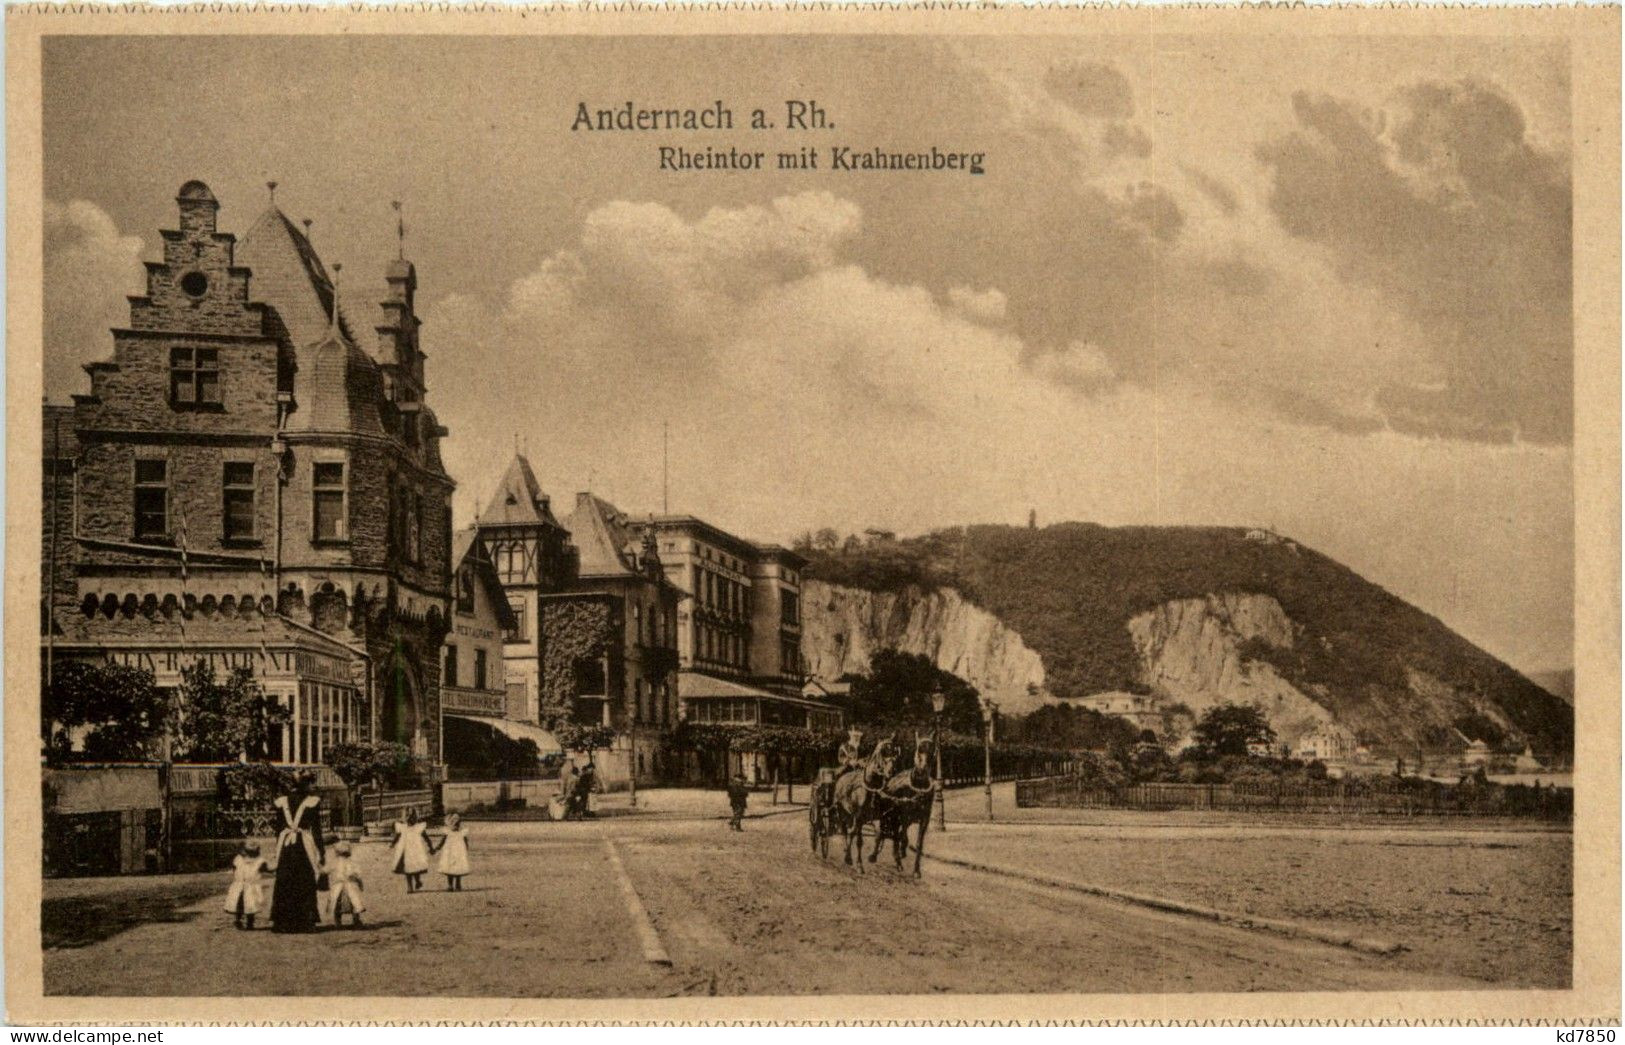 Andernach - Rheintor - Andernach